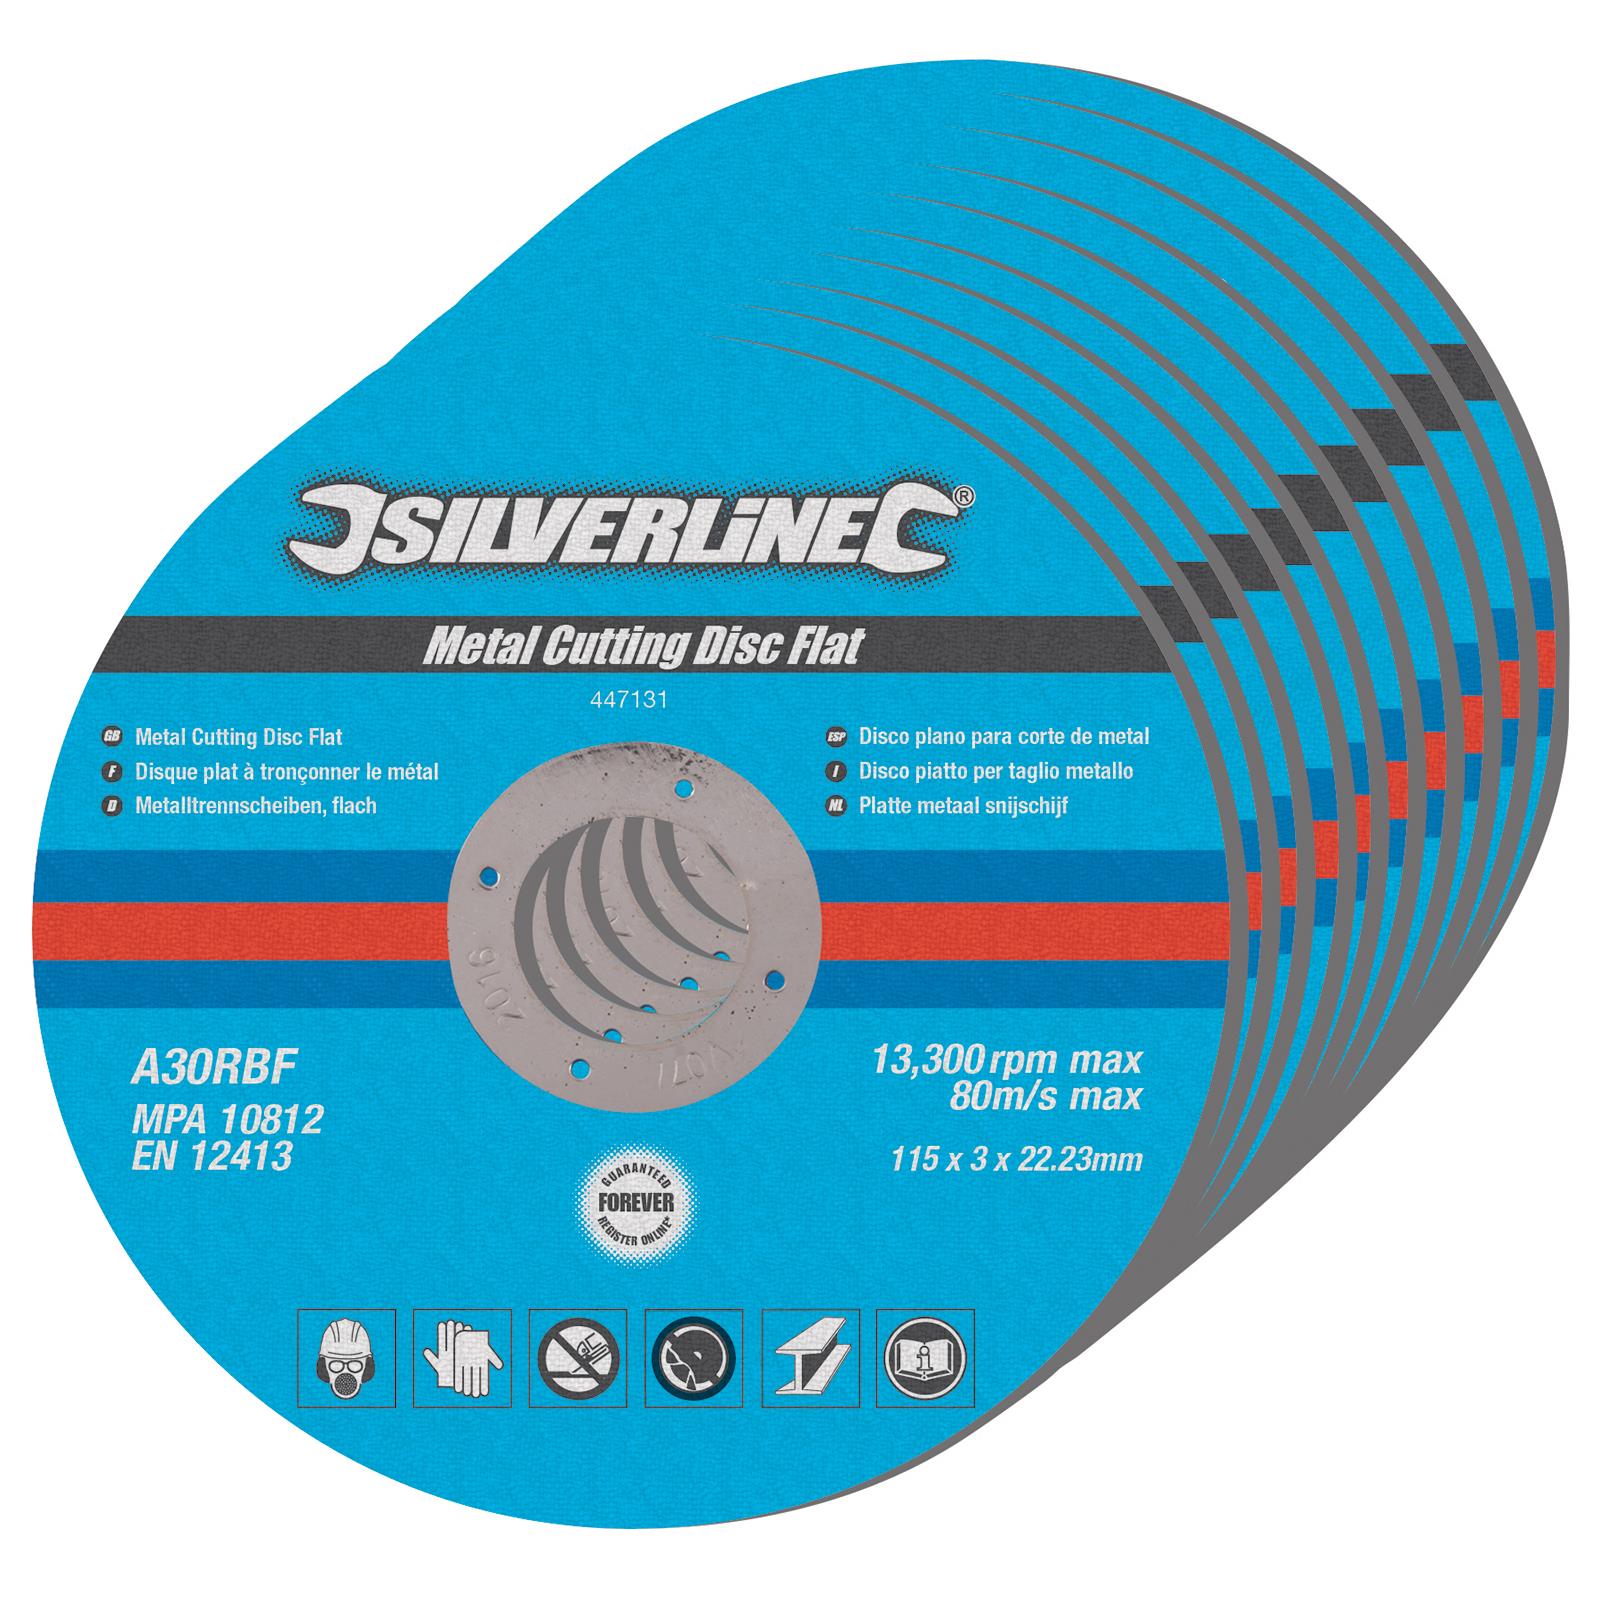 Silverline Metal Cutting Disc Flat 10 Pack 115 x 3 x 22.23mm